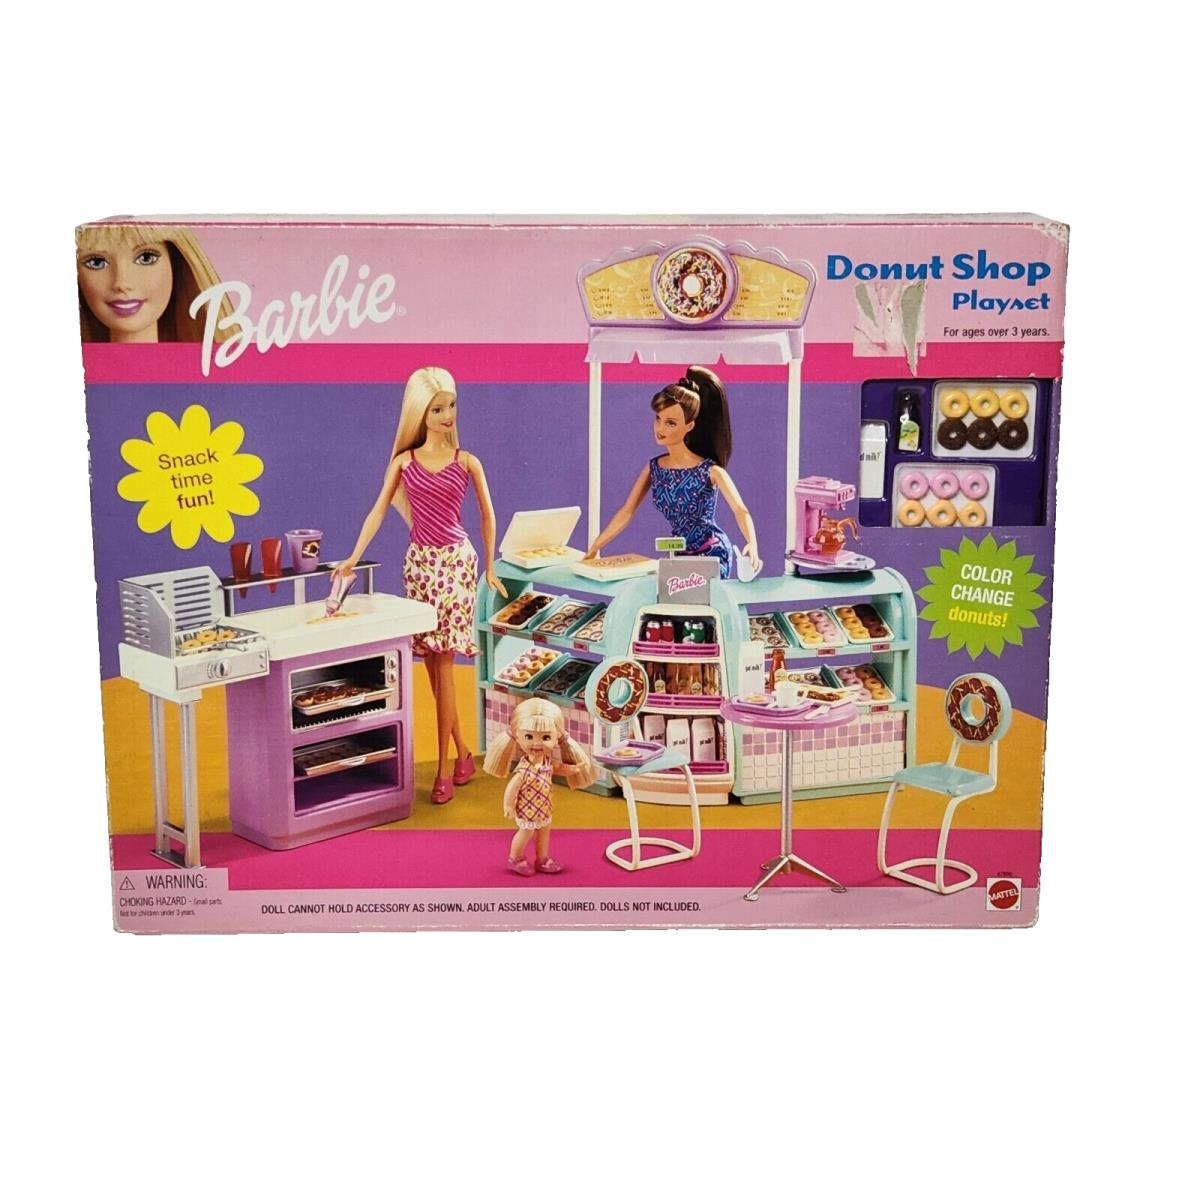 2002 Mattel Barbie Donut Shop Playset Complete 47899